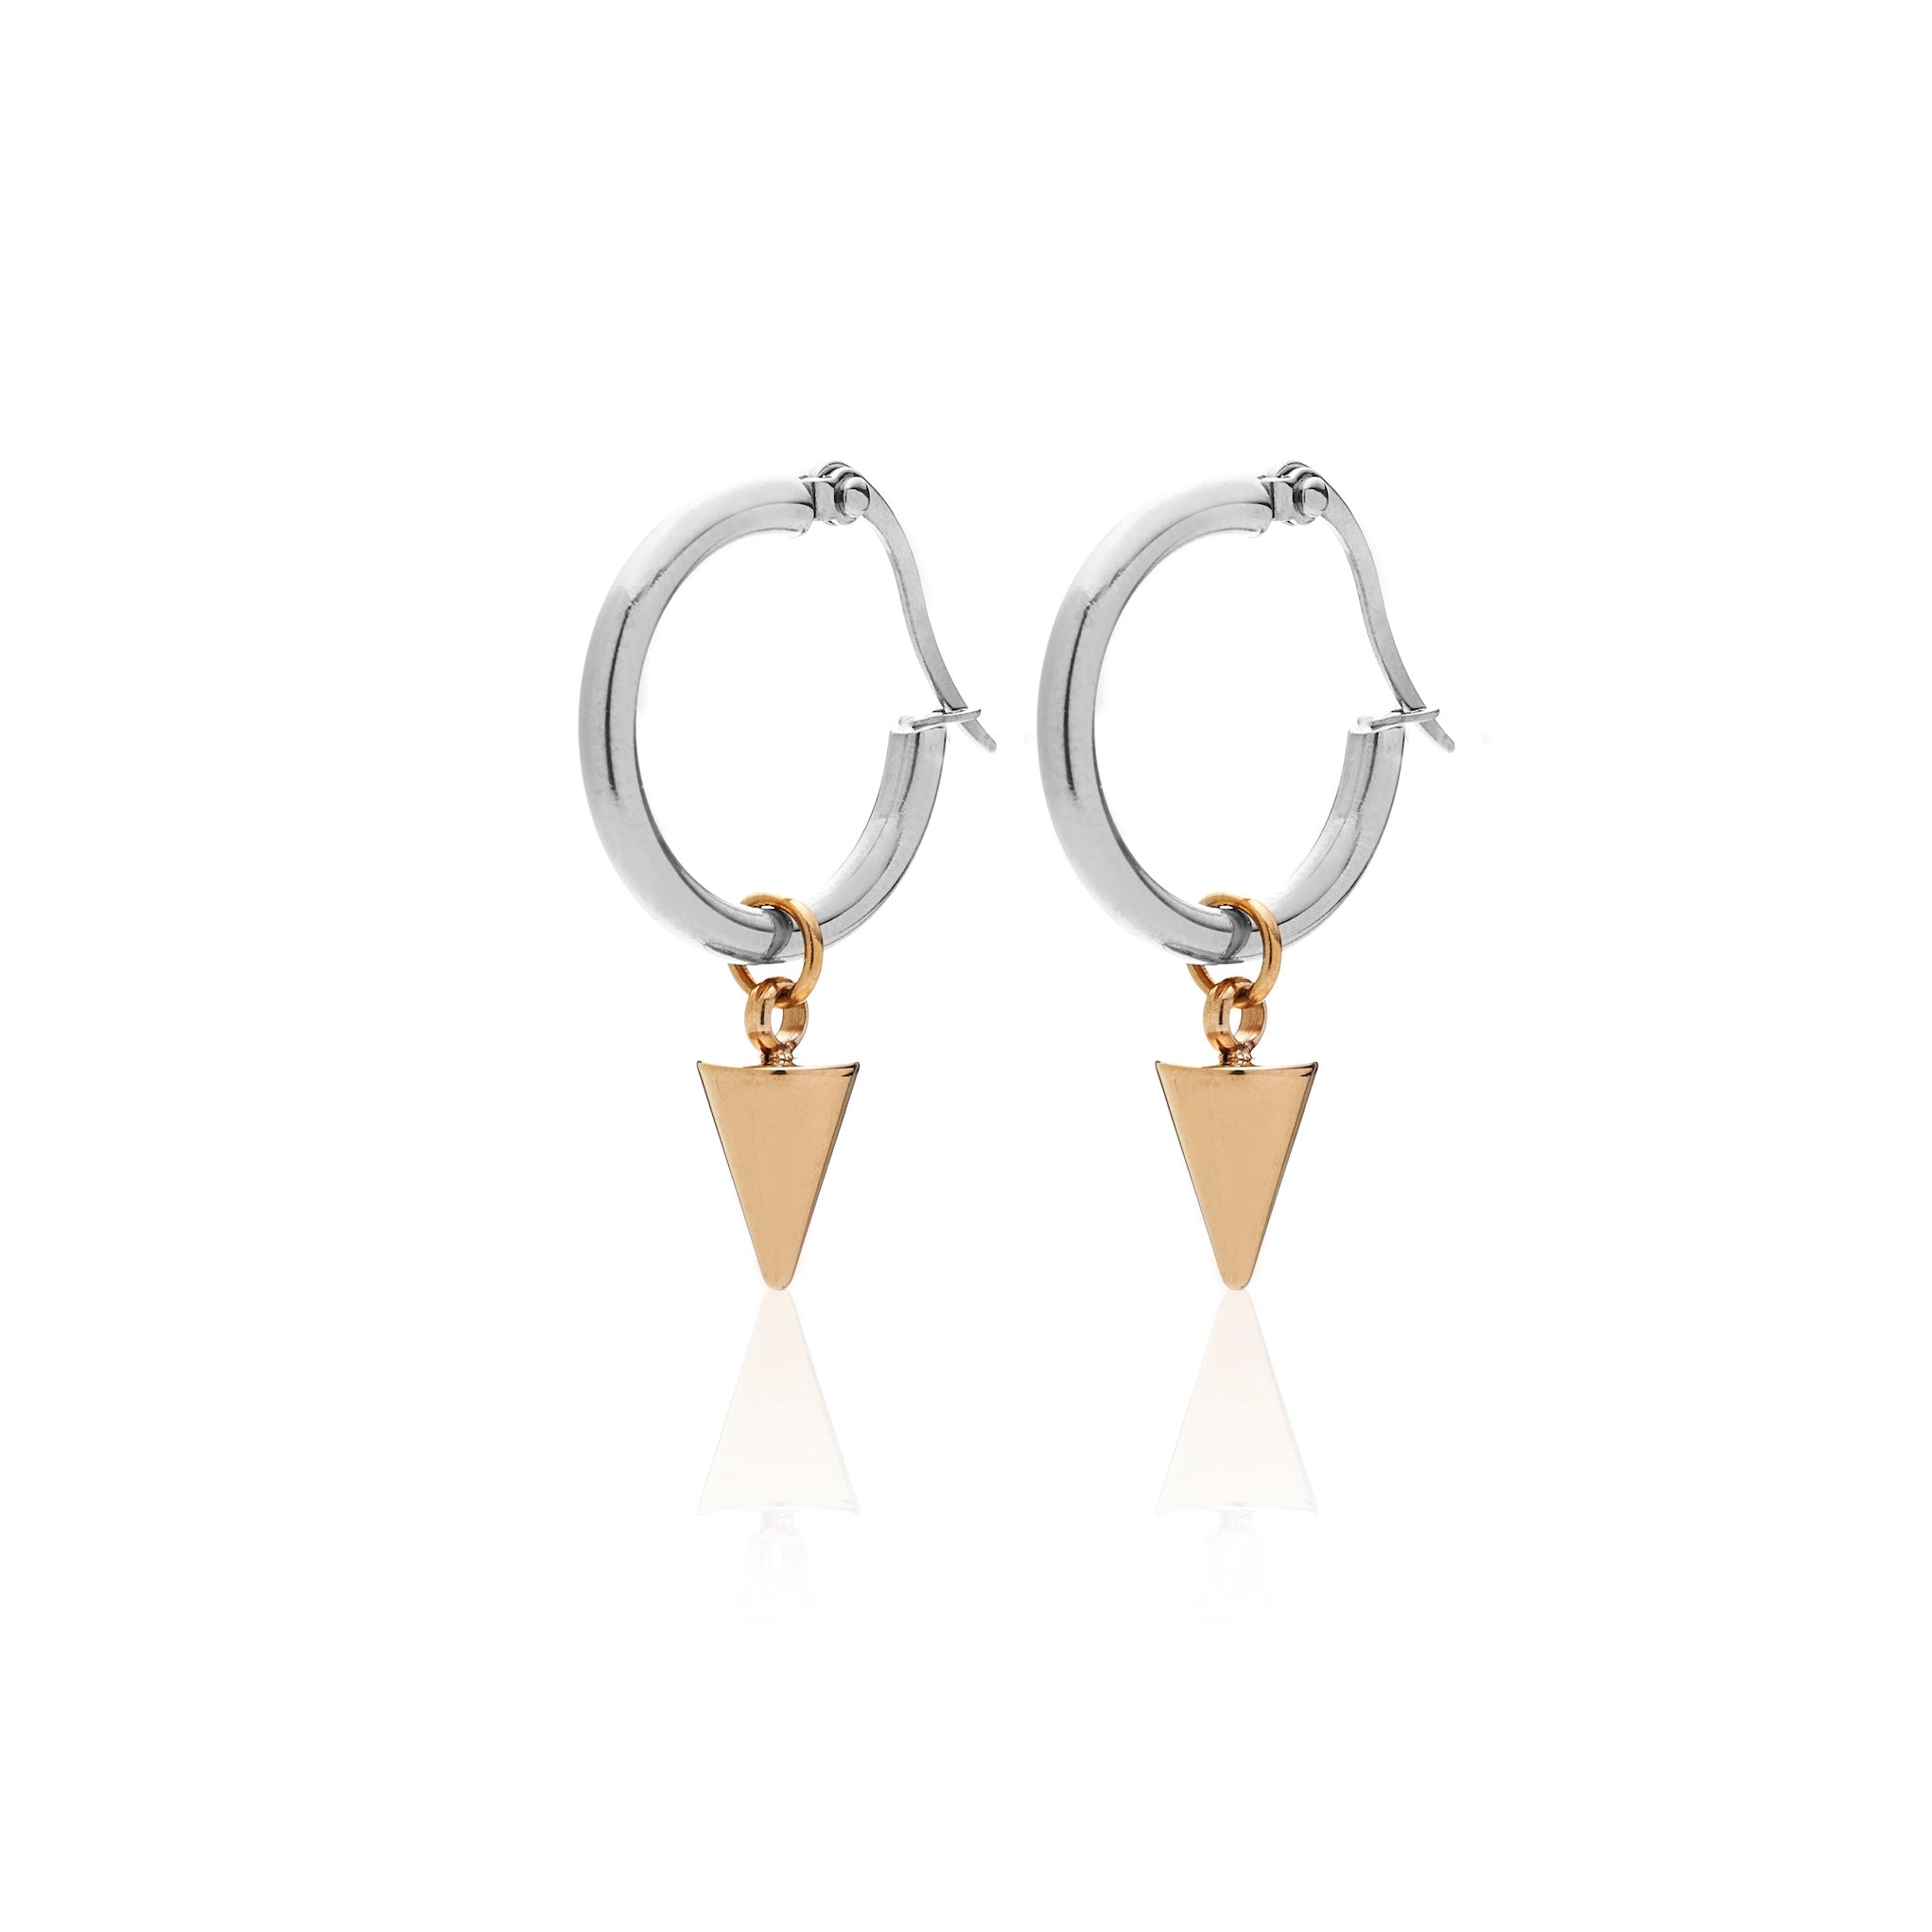 Silk & Steel Jewellery - Two Tone Kate Hoops - Silver Hoop Earrings with Gold Spike